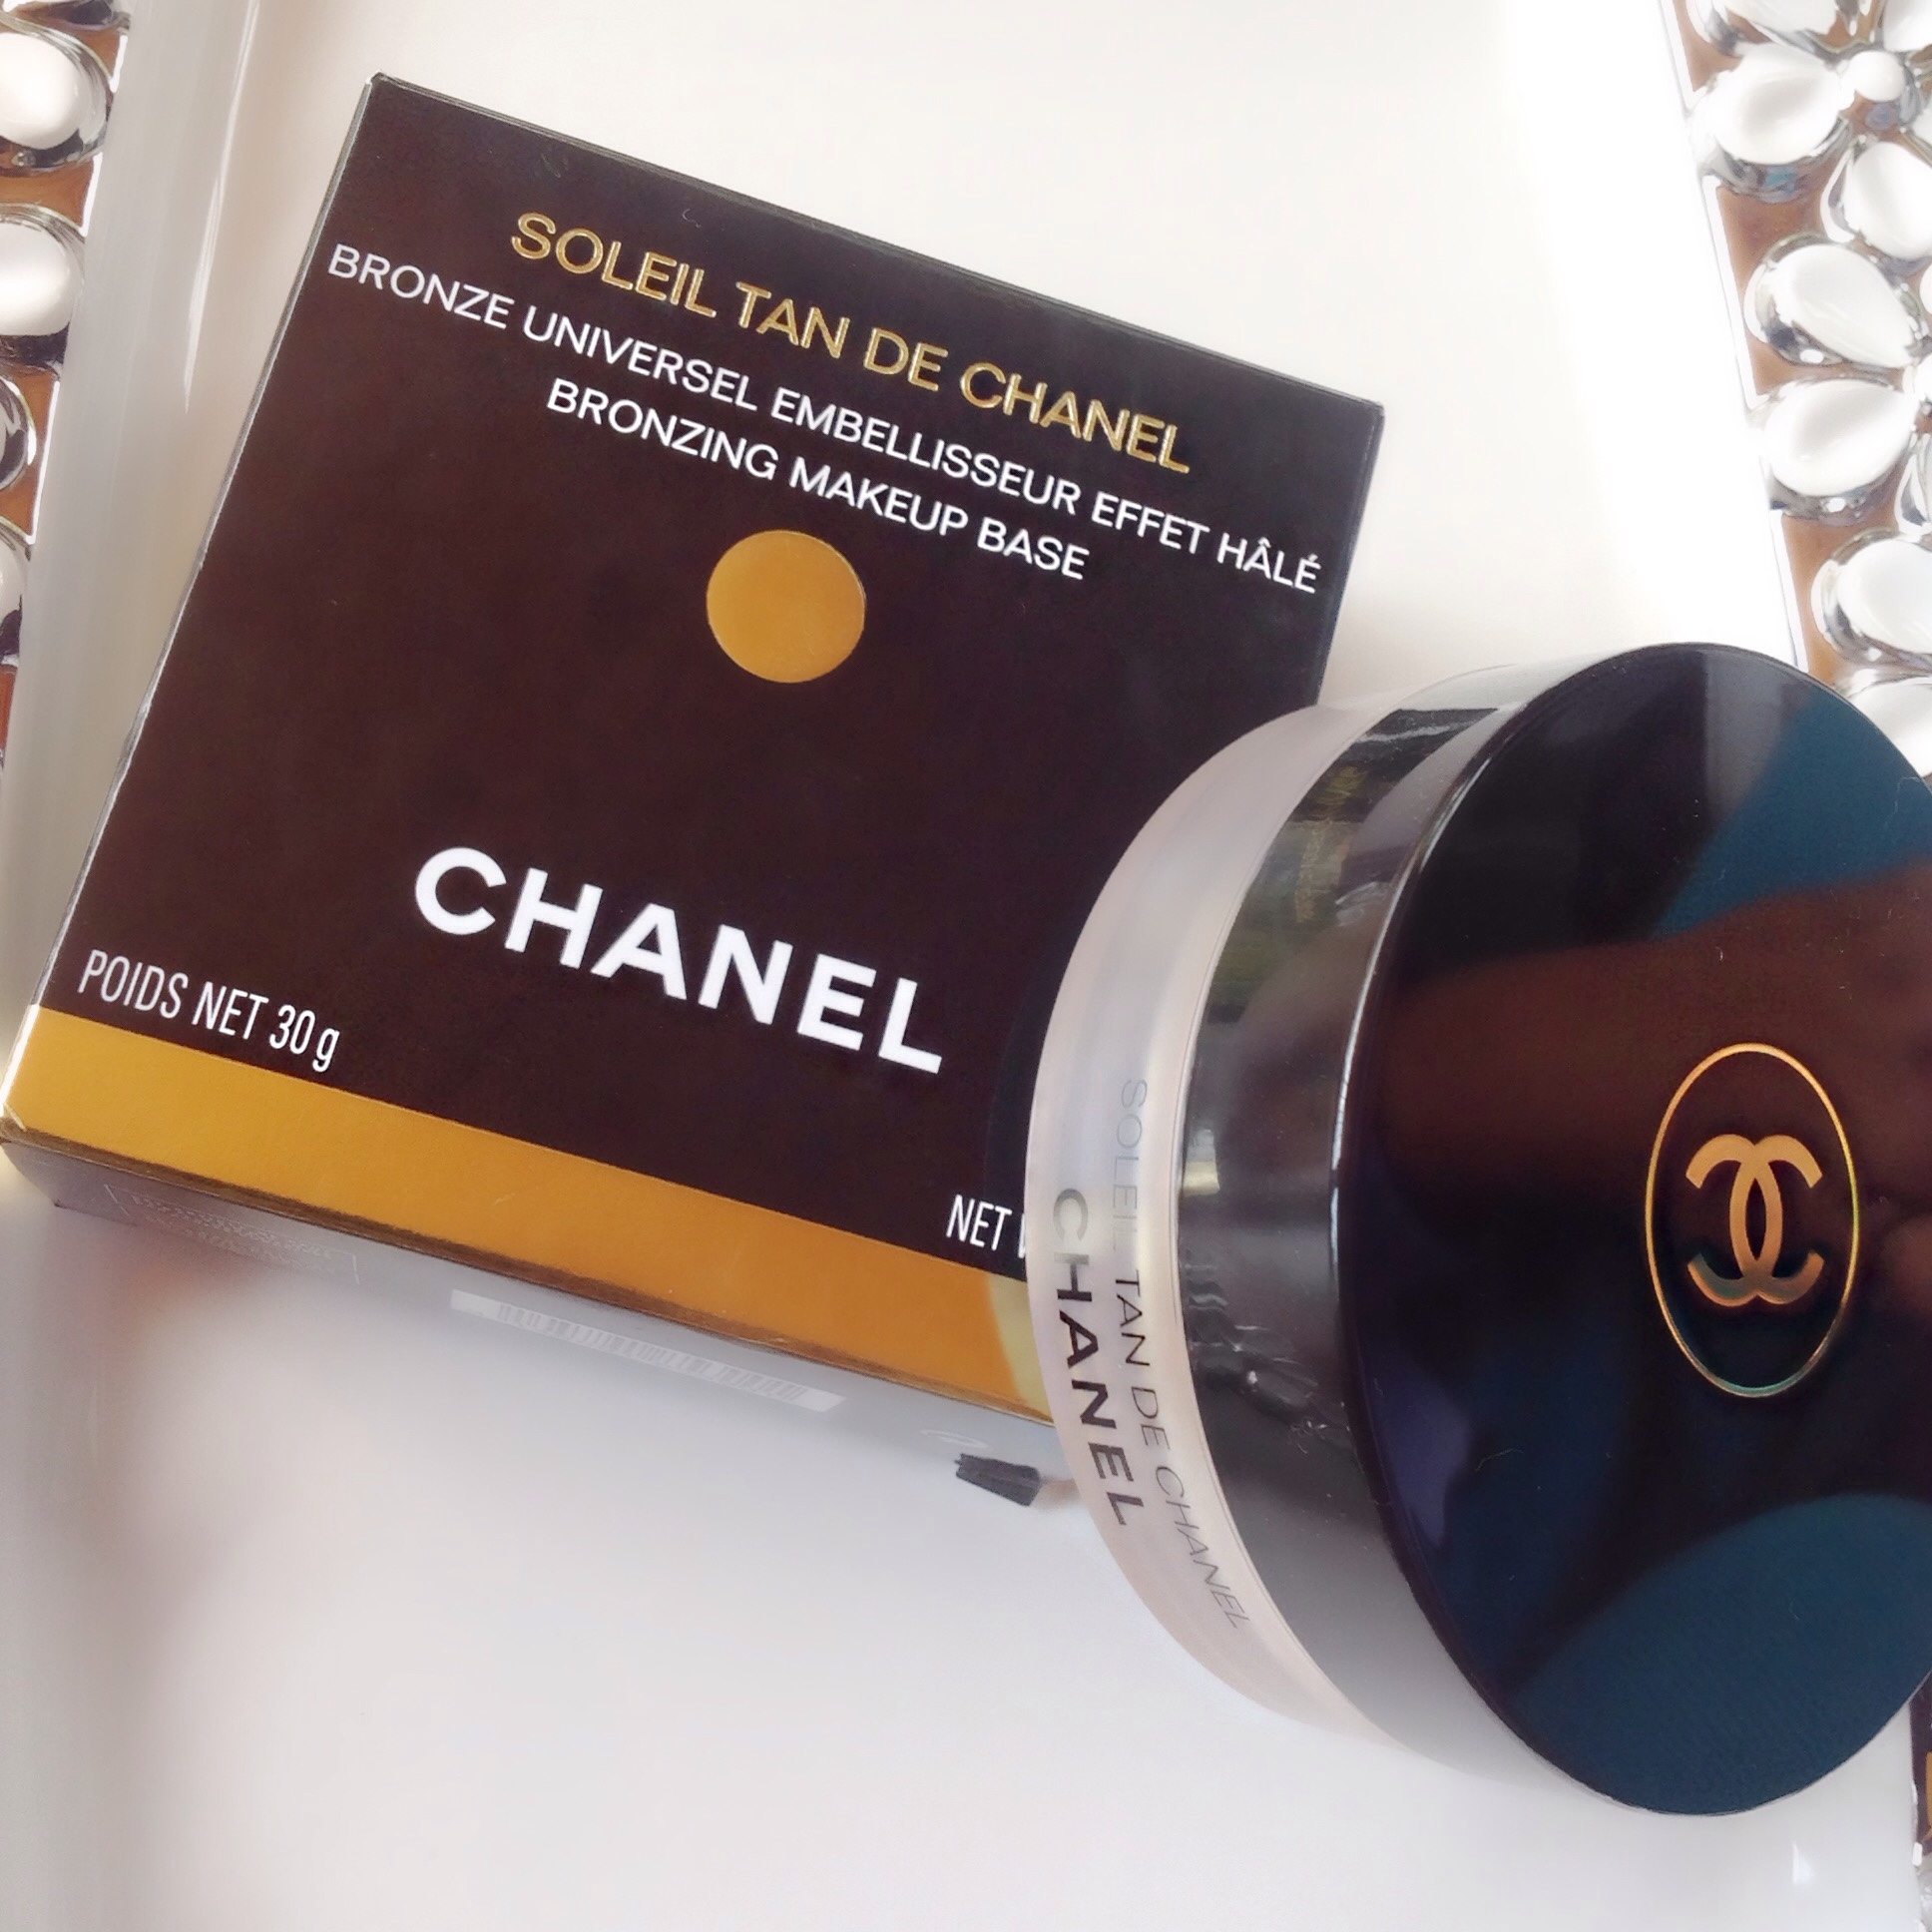 Review of Chanel- Soleil Tan De Chanel bronzing base